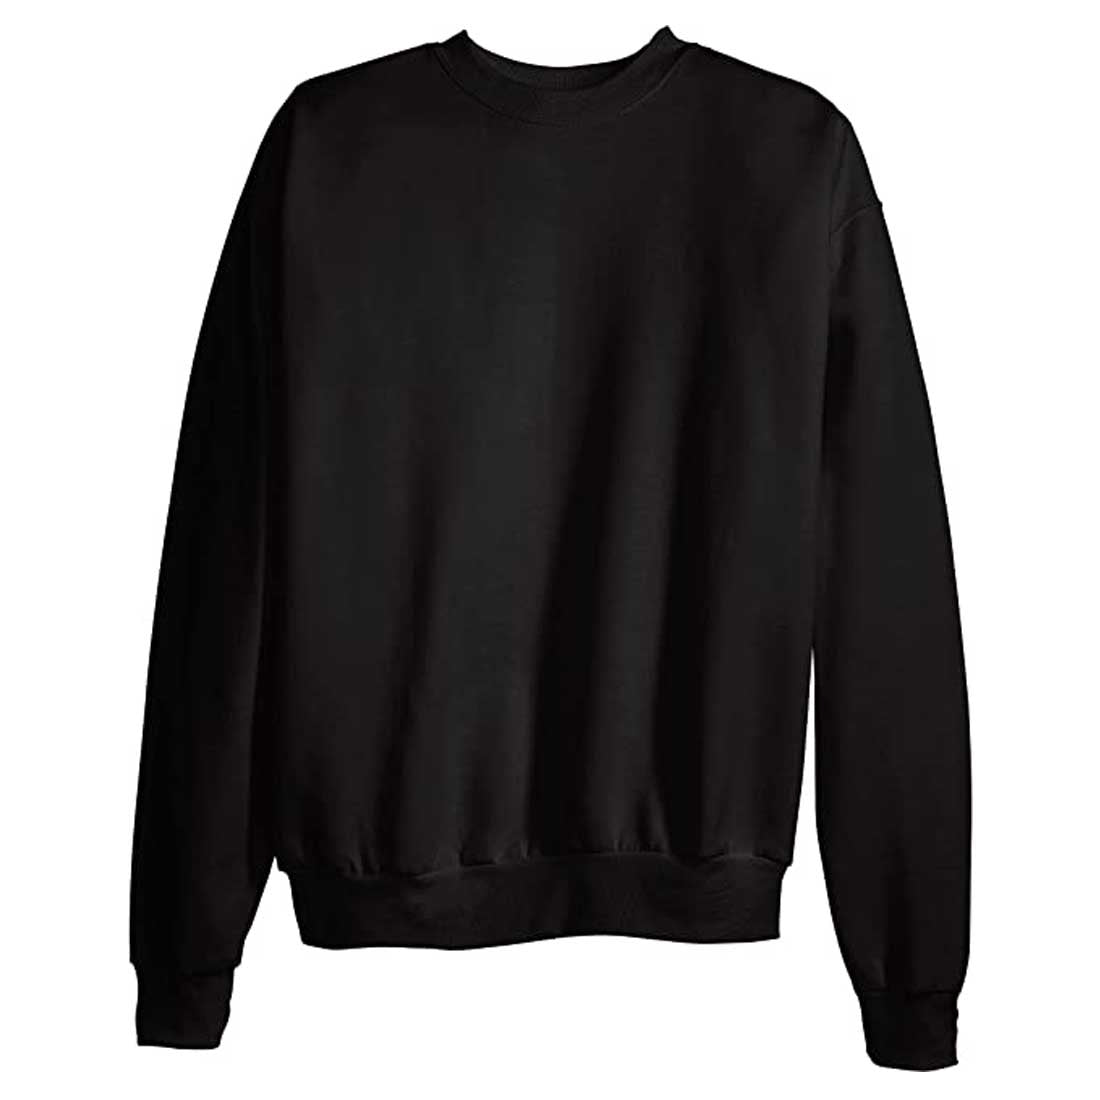 Personalized Black Sweatshirt for Men Full Sleeves - Monogram